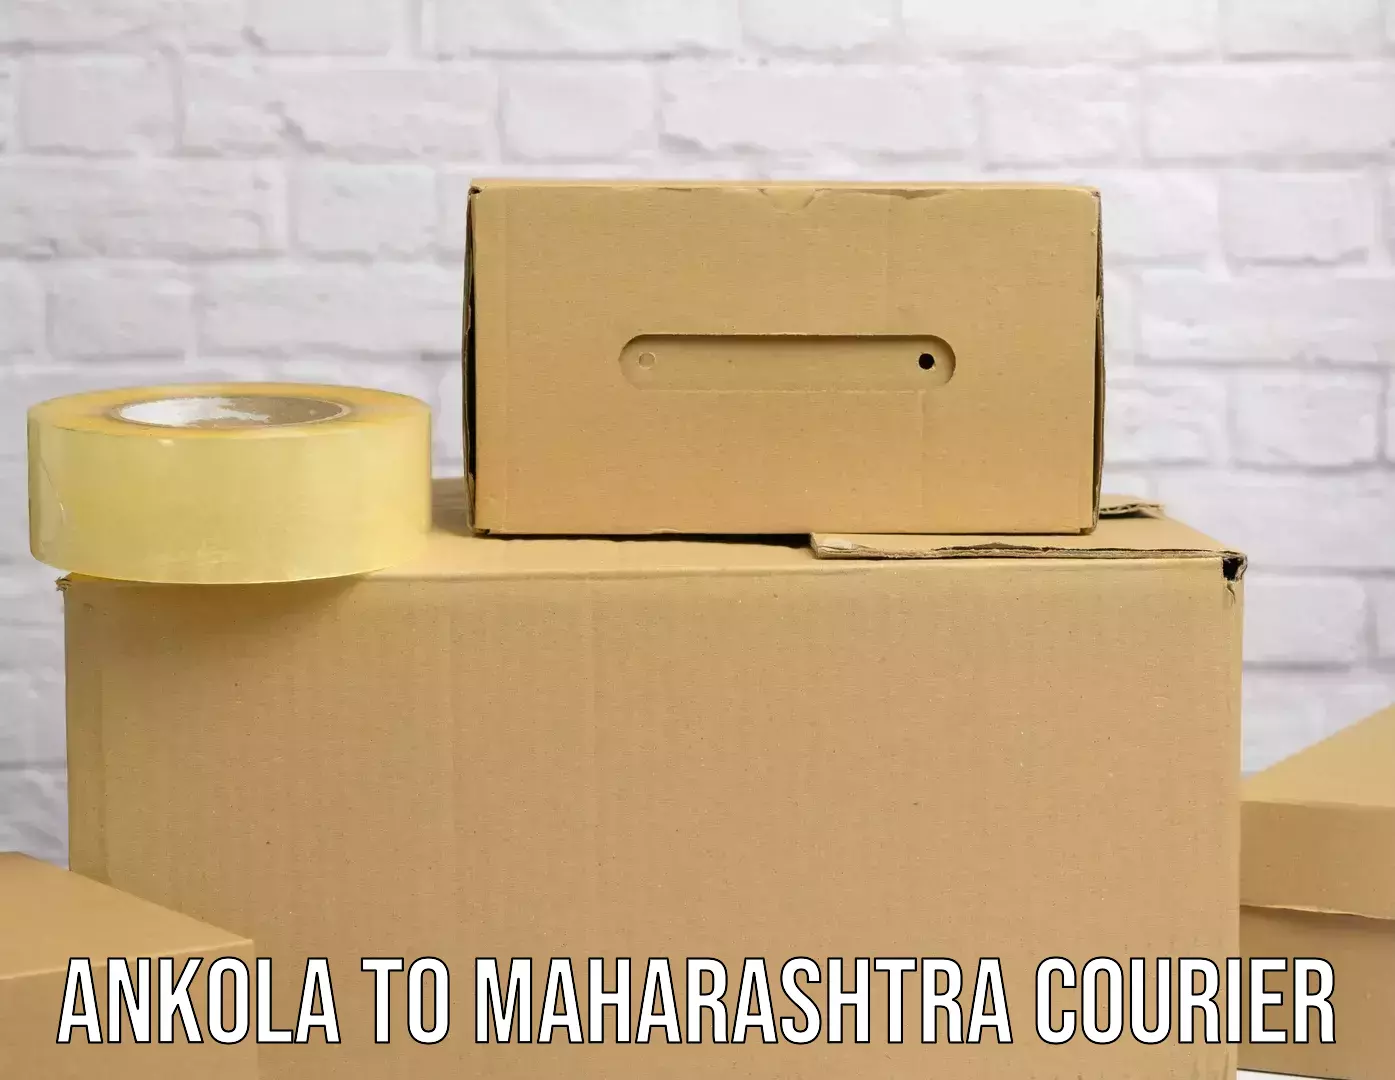 Advanced courier platforms Ankola to Tata Institute of Social Sciences Mumbai